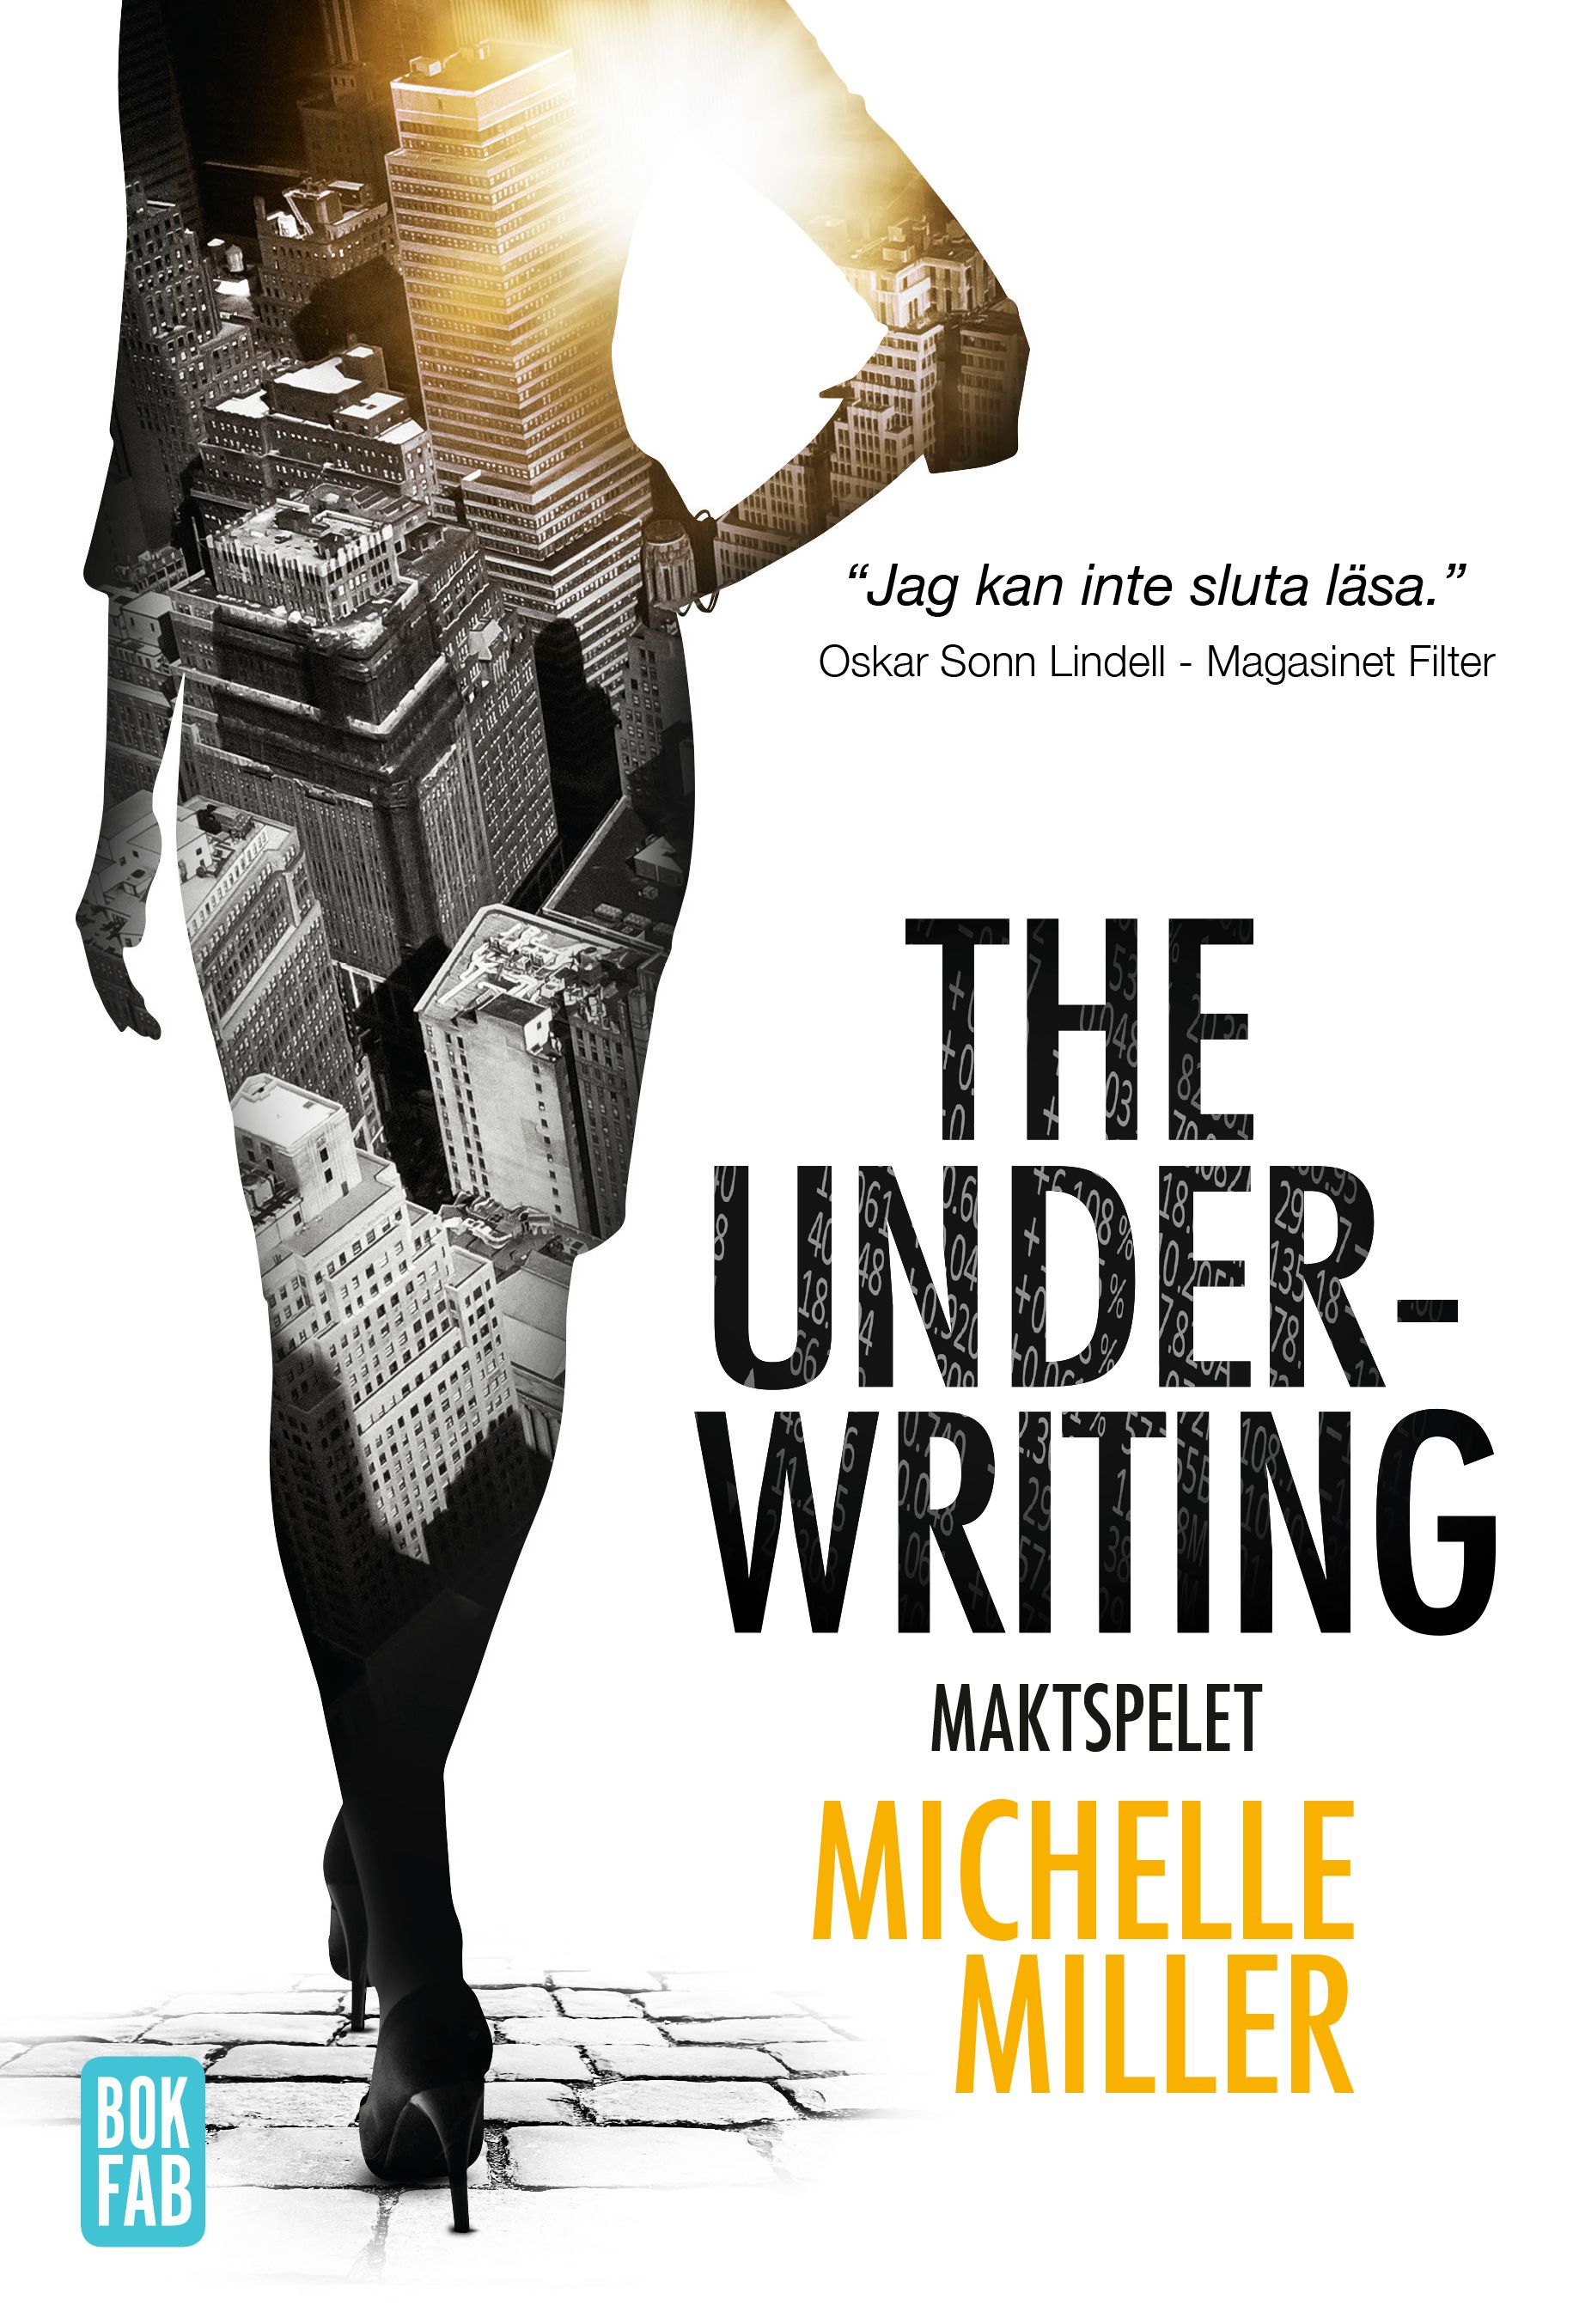 The Underwriting : Maktspelet, eBook by Michelle Miller